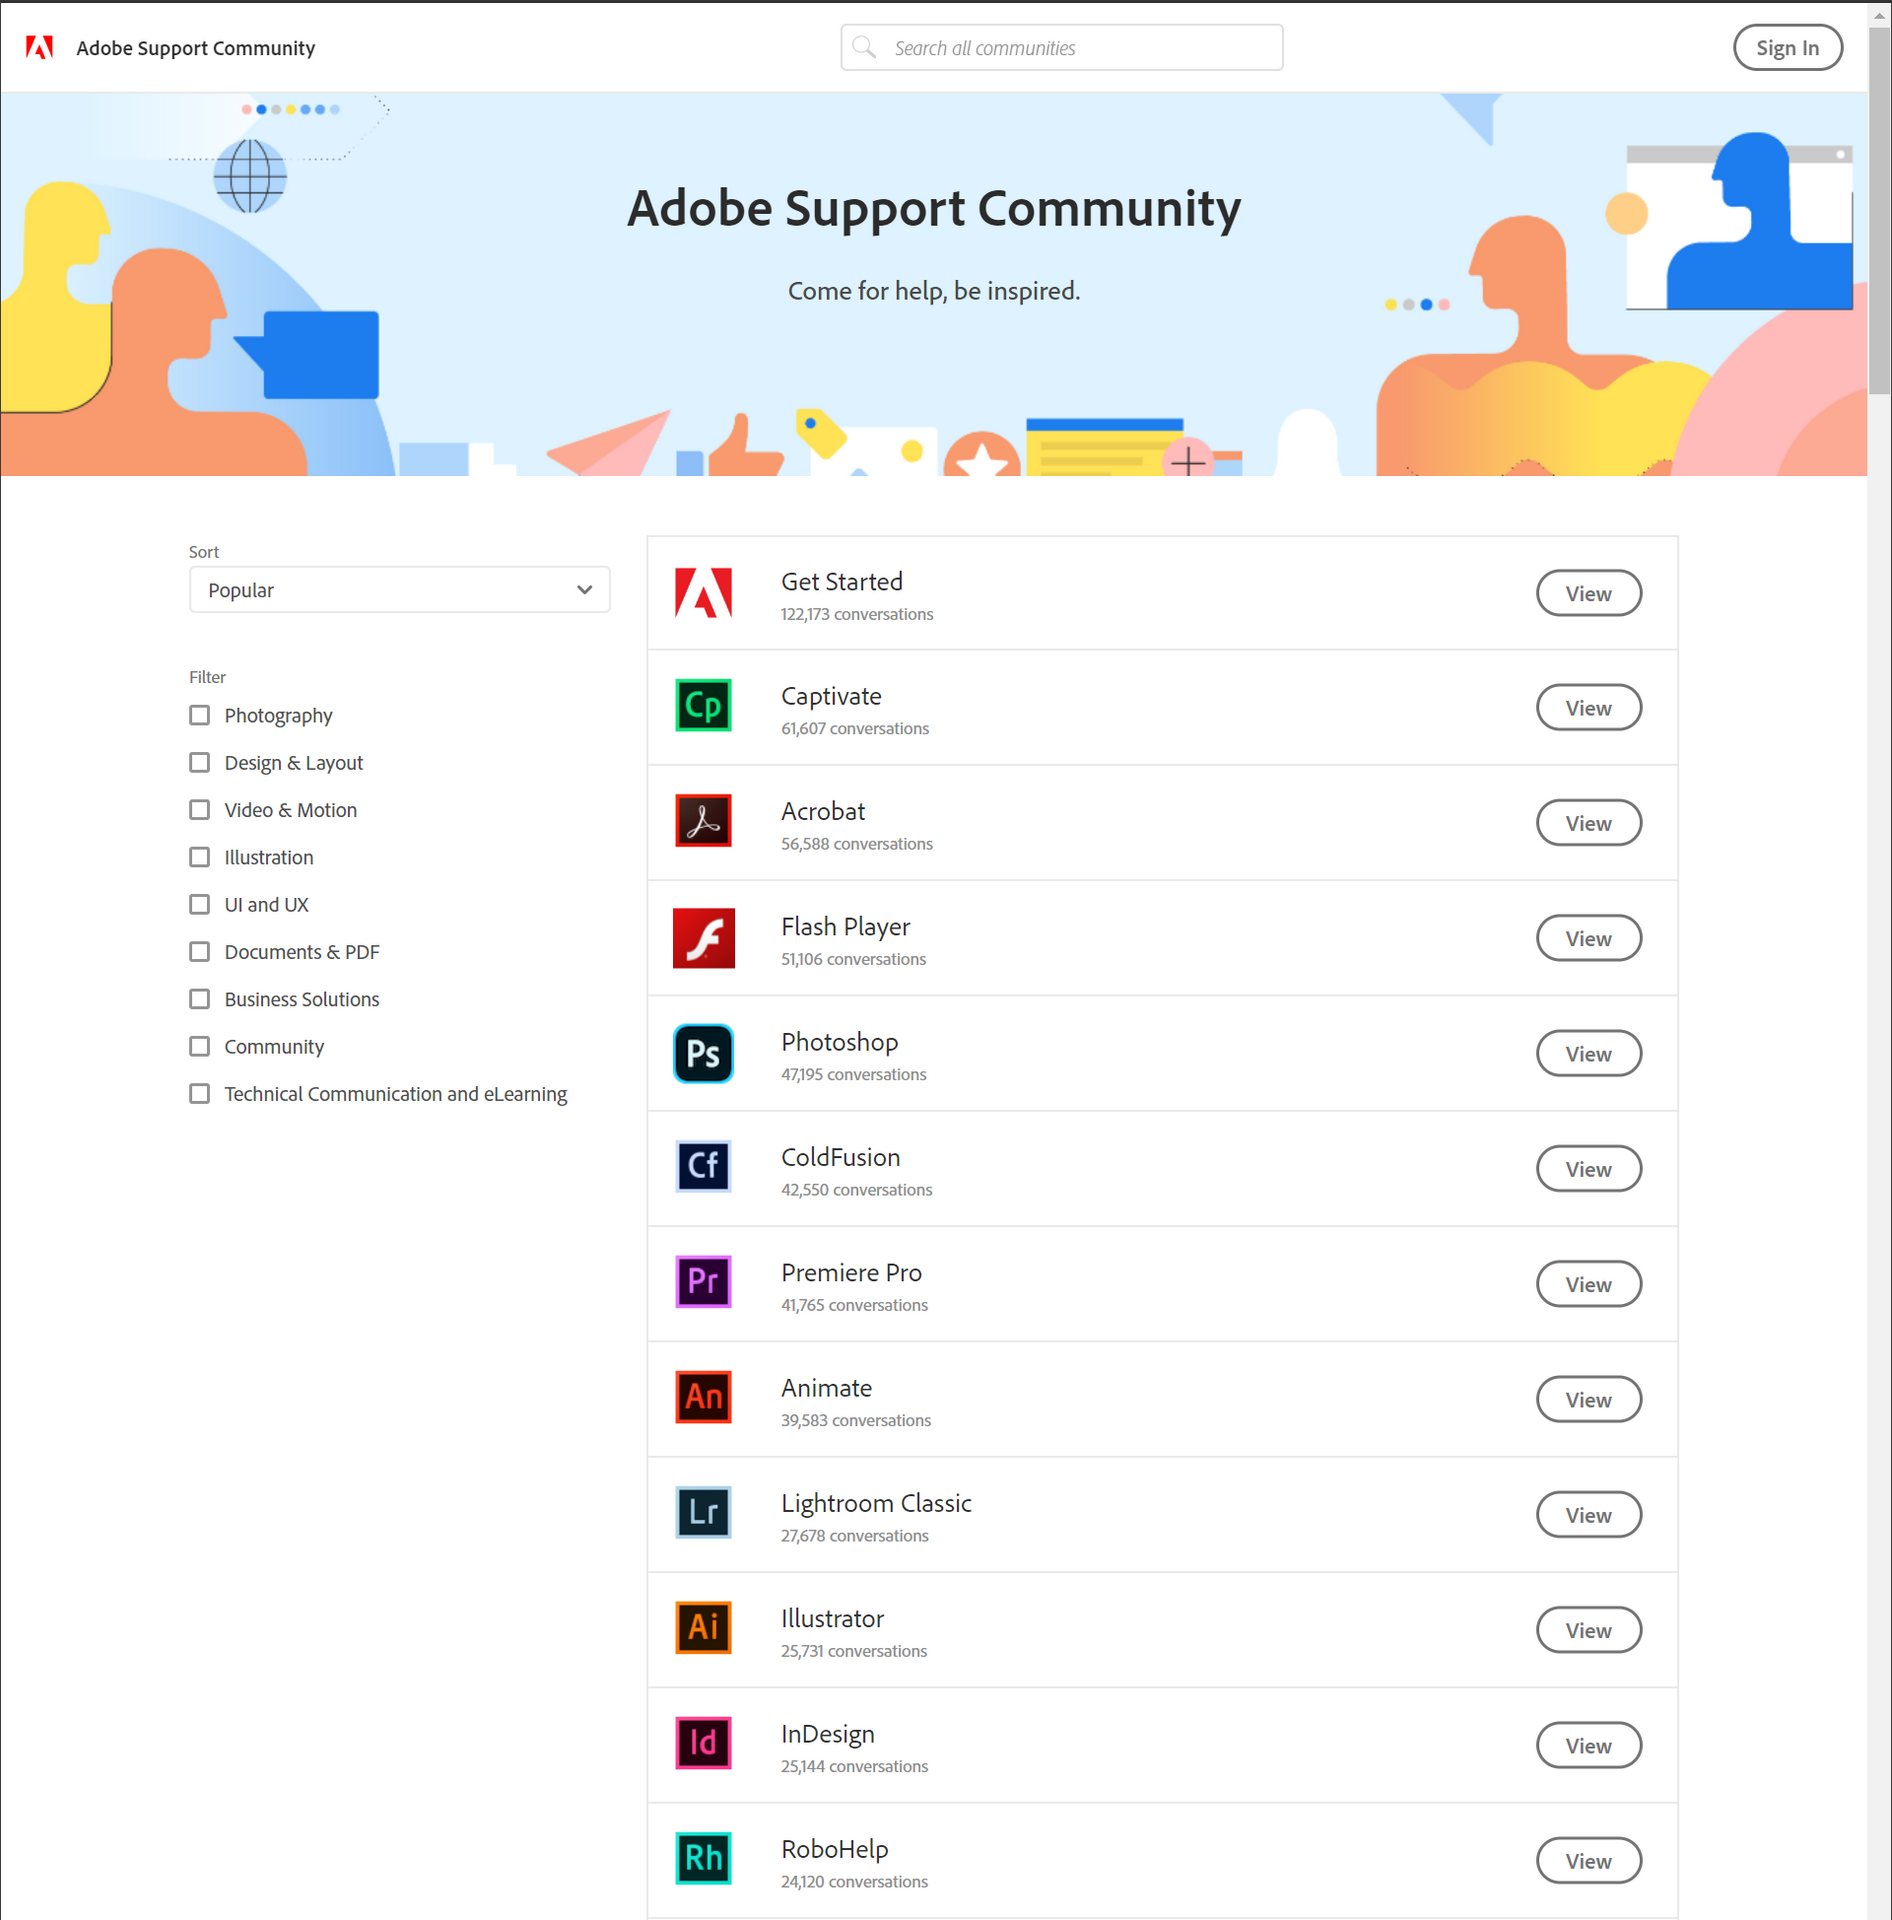 Adobe Support Community